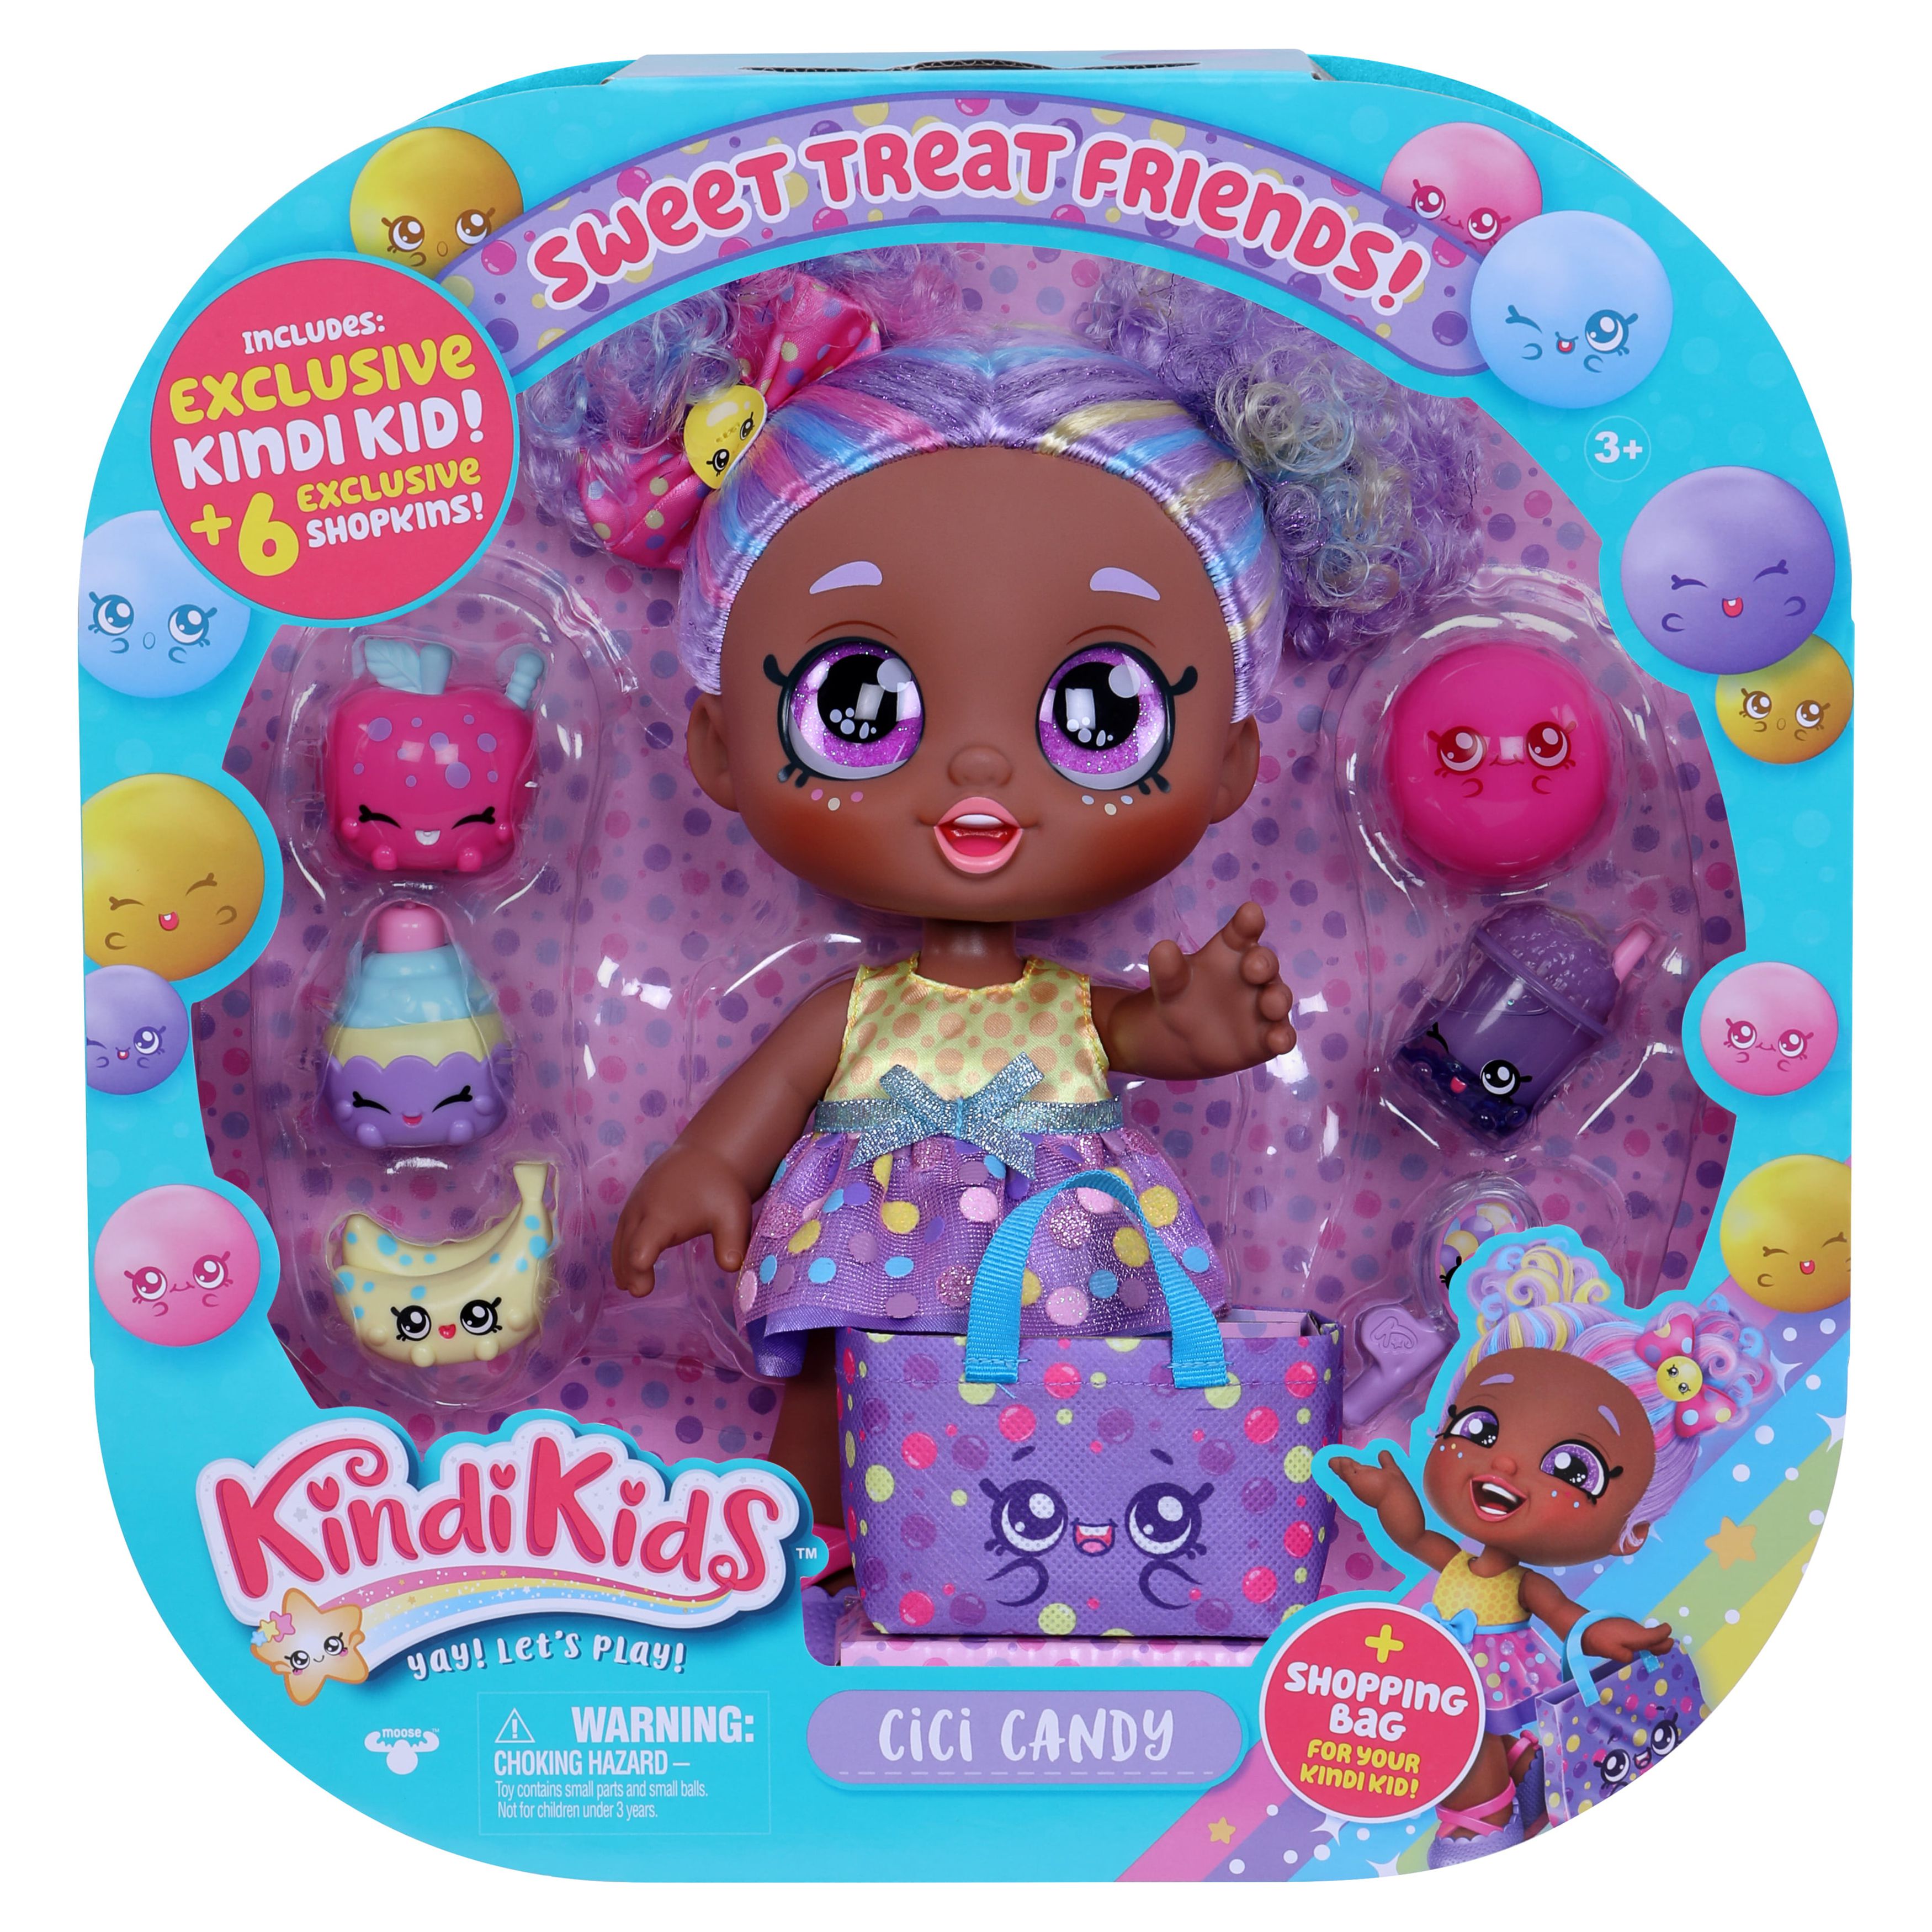 Kindi Kids Skittles 1 Shopping bag plus Shopkins Doll Playset, 8 Pieces - image 2 of 5